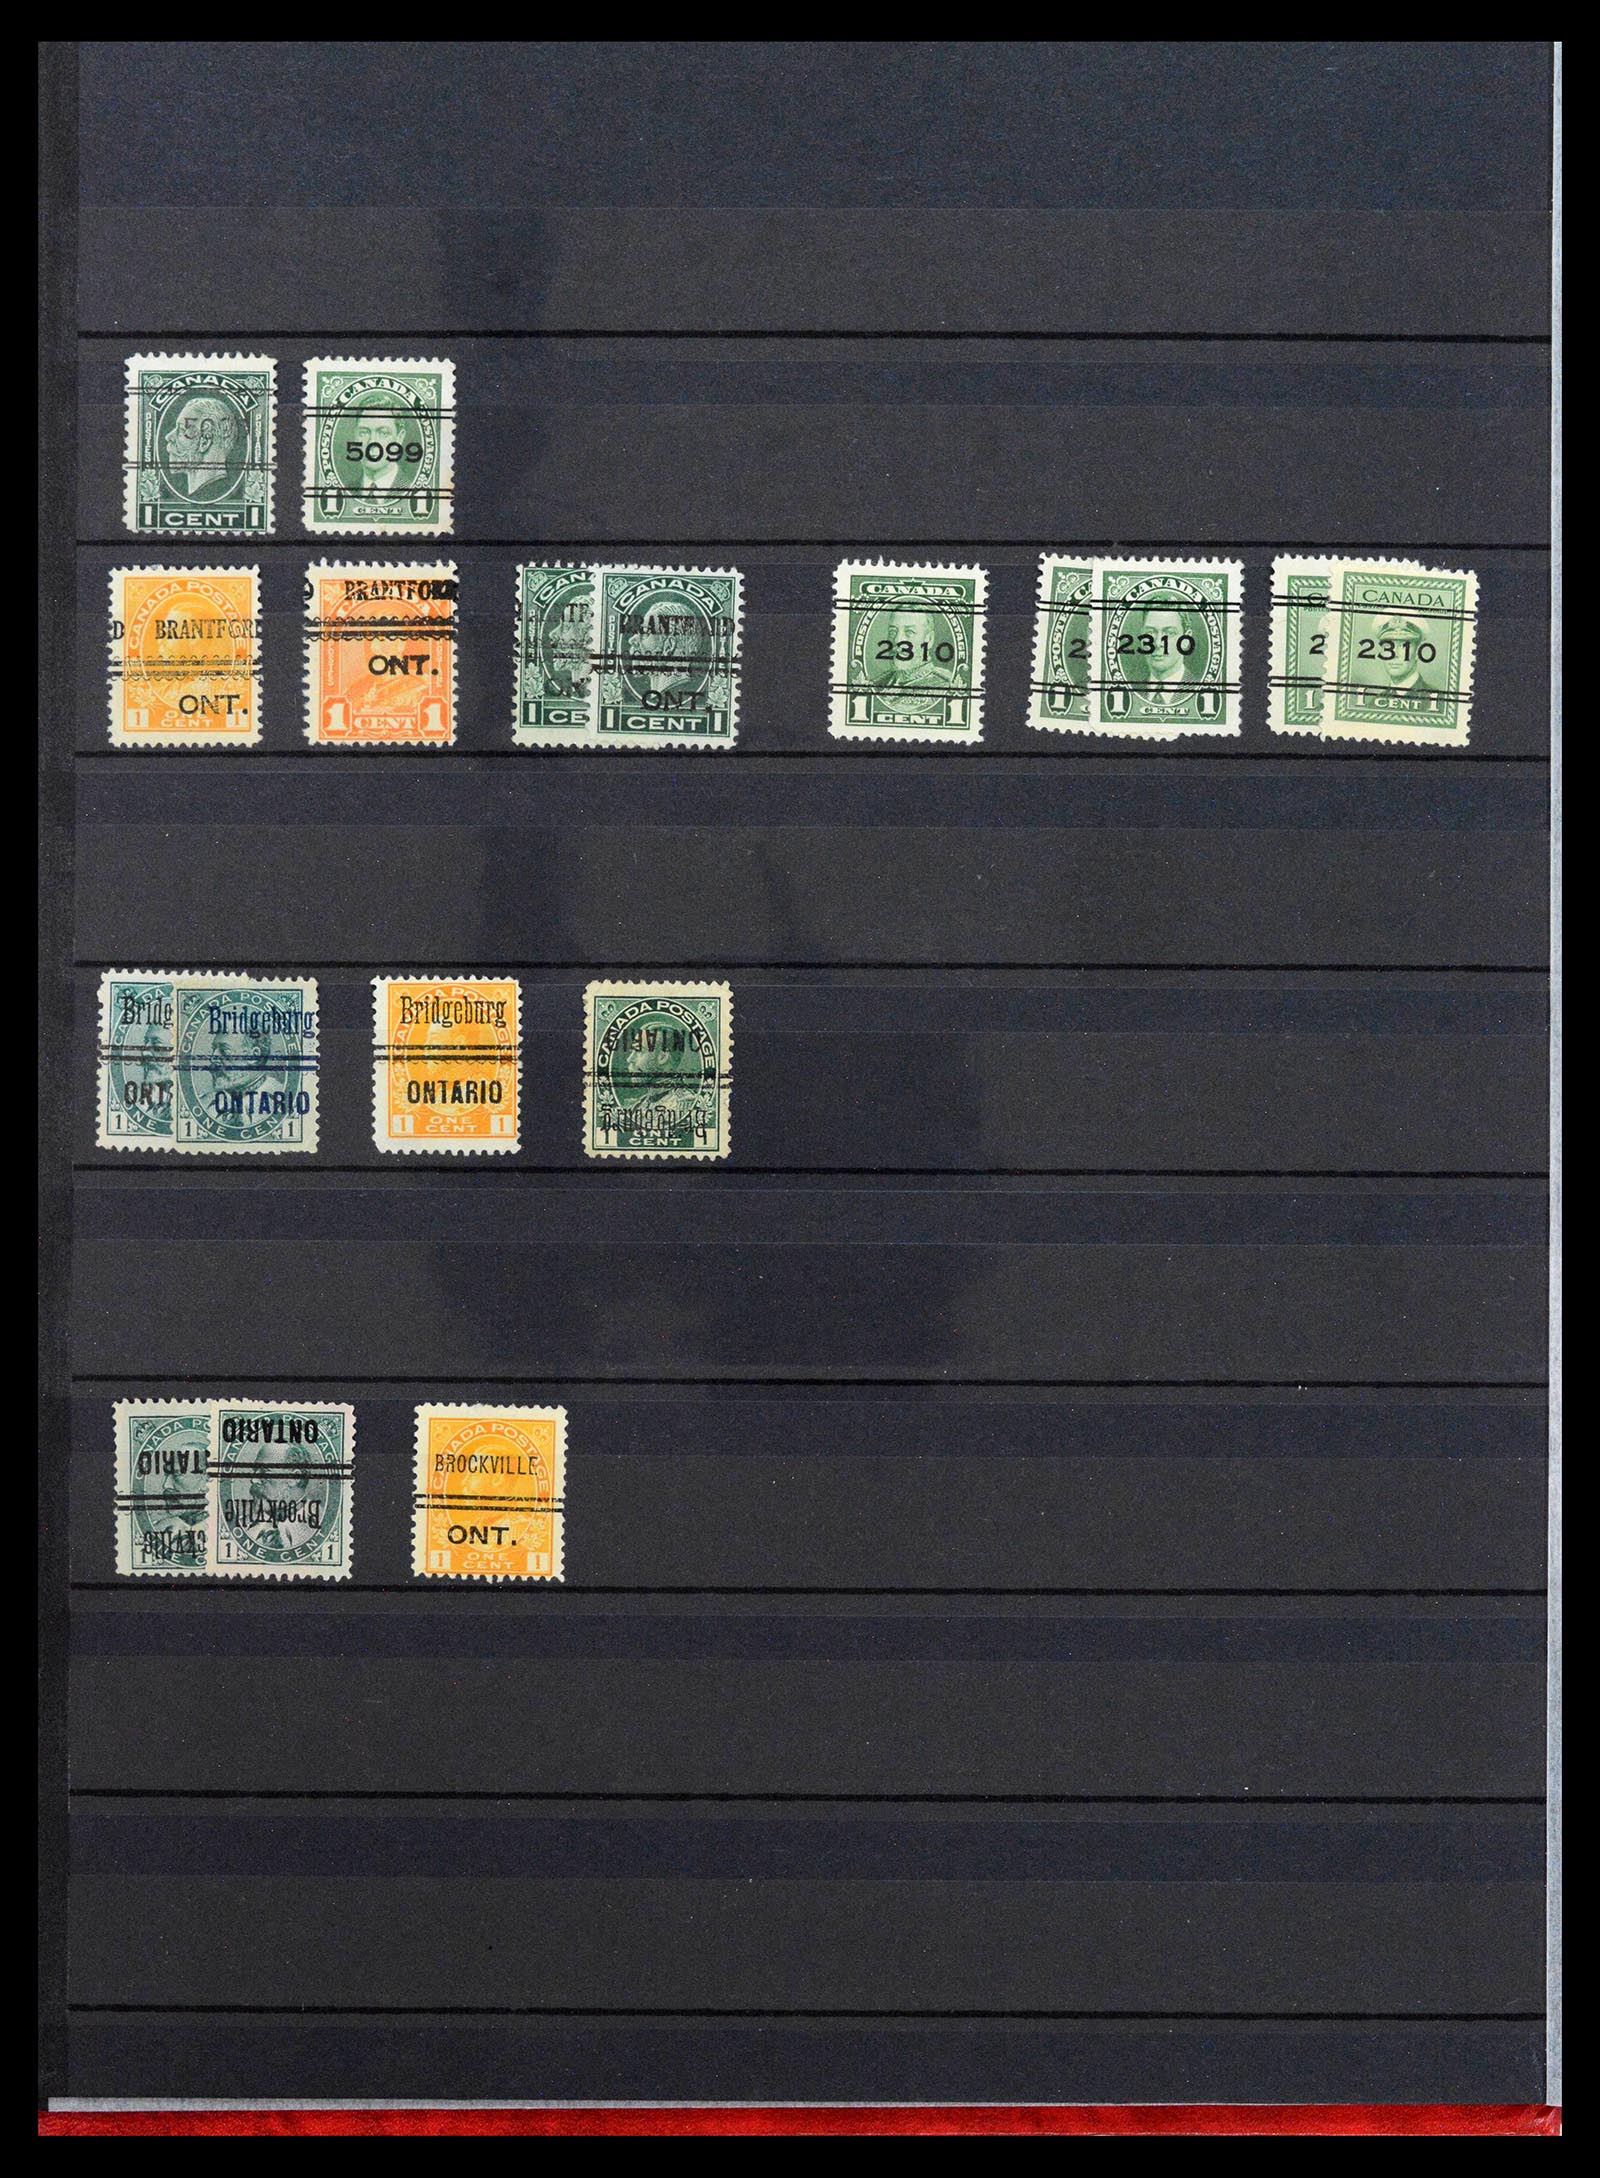 39484 0004 - Stamp collection 39484 Canada precancels 1880-1970.